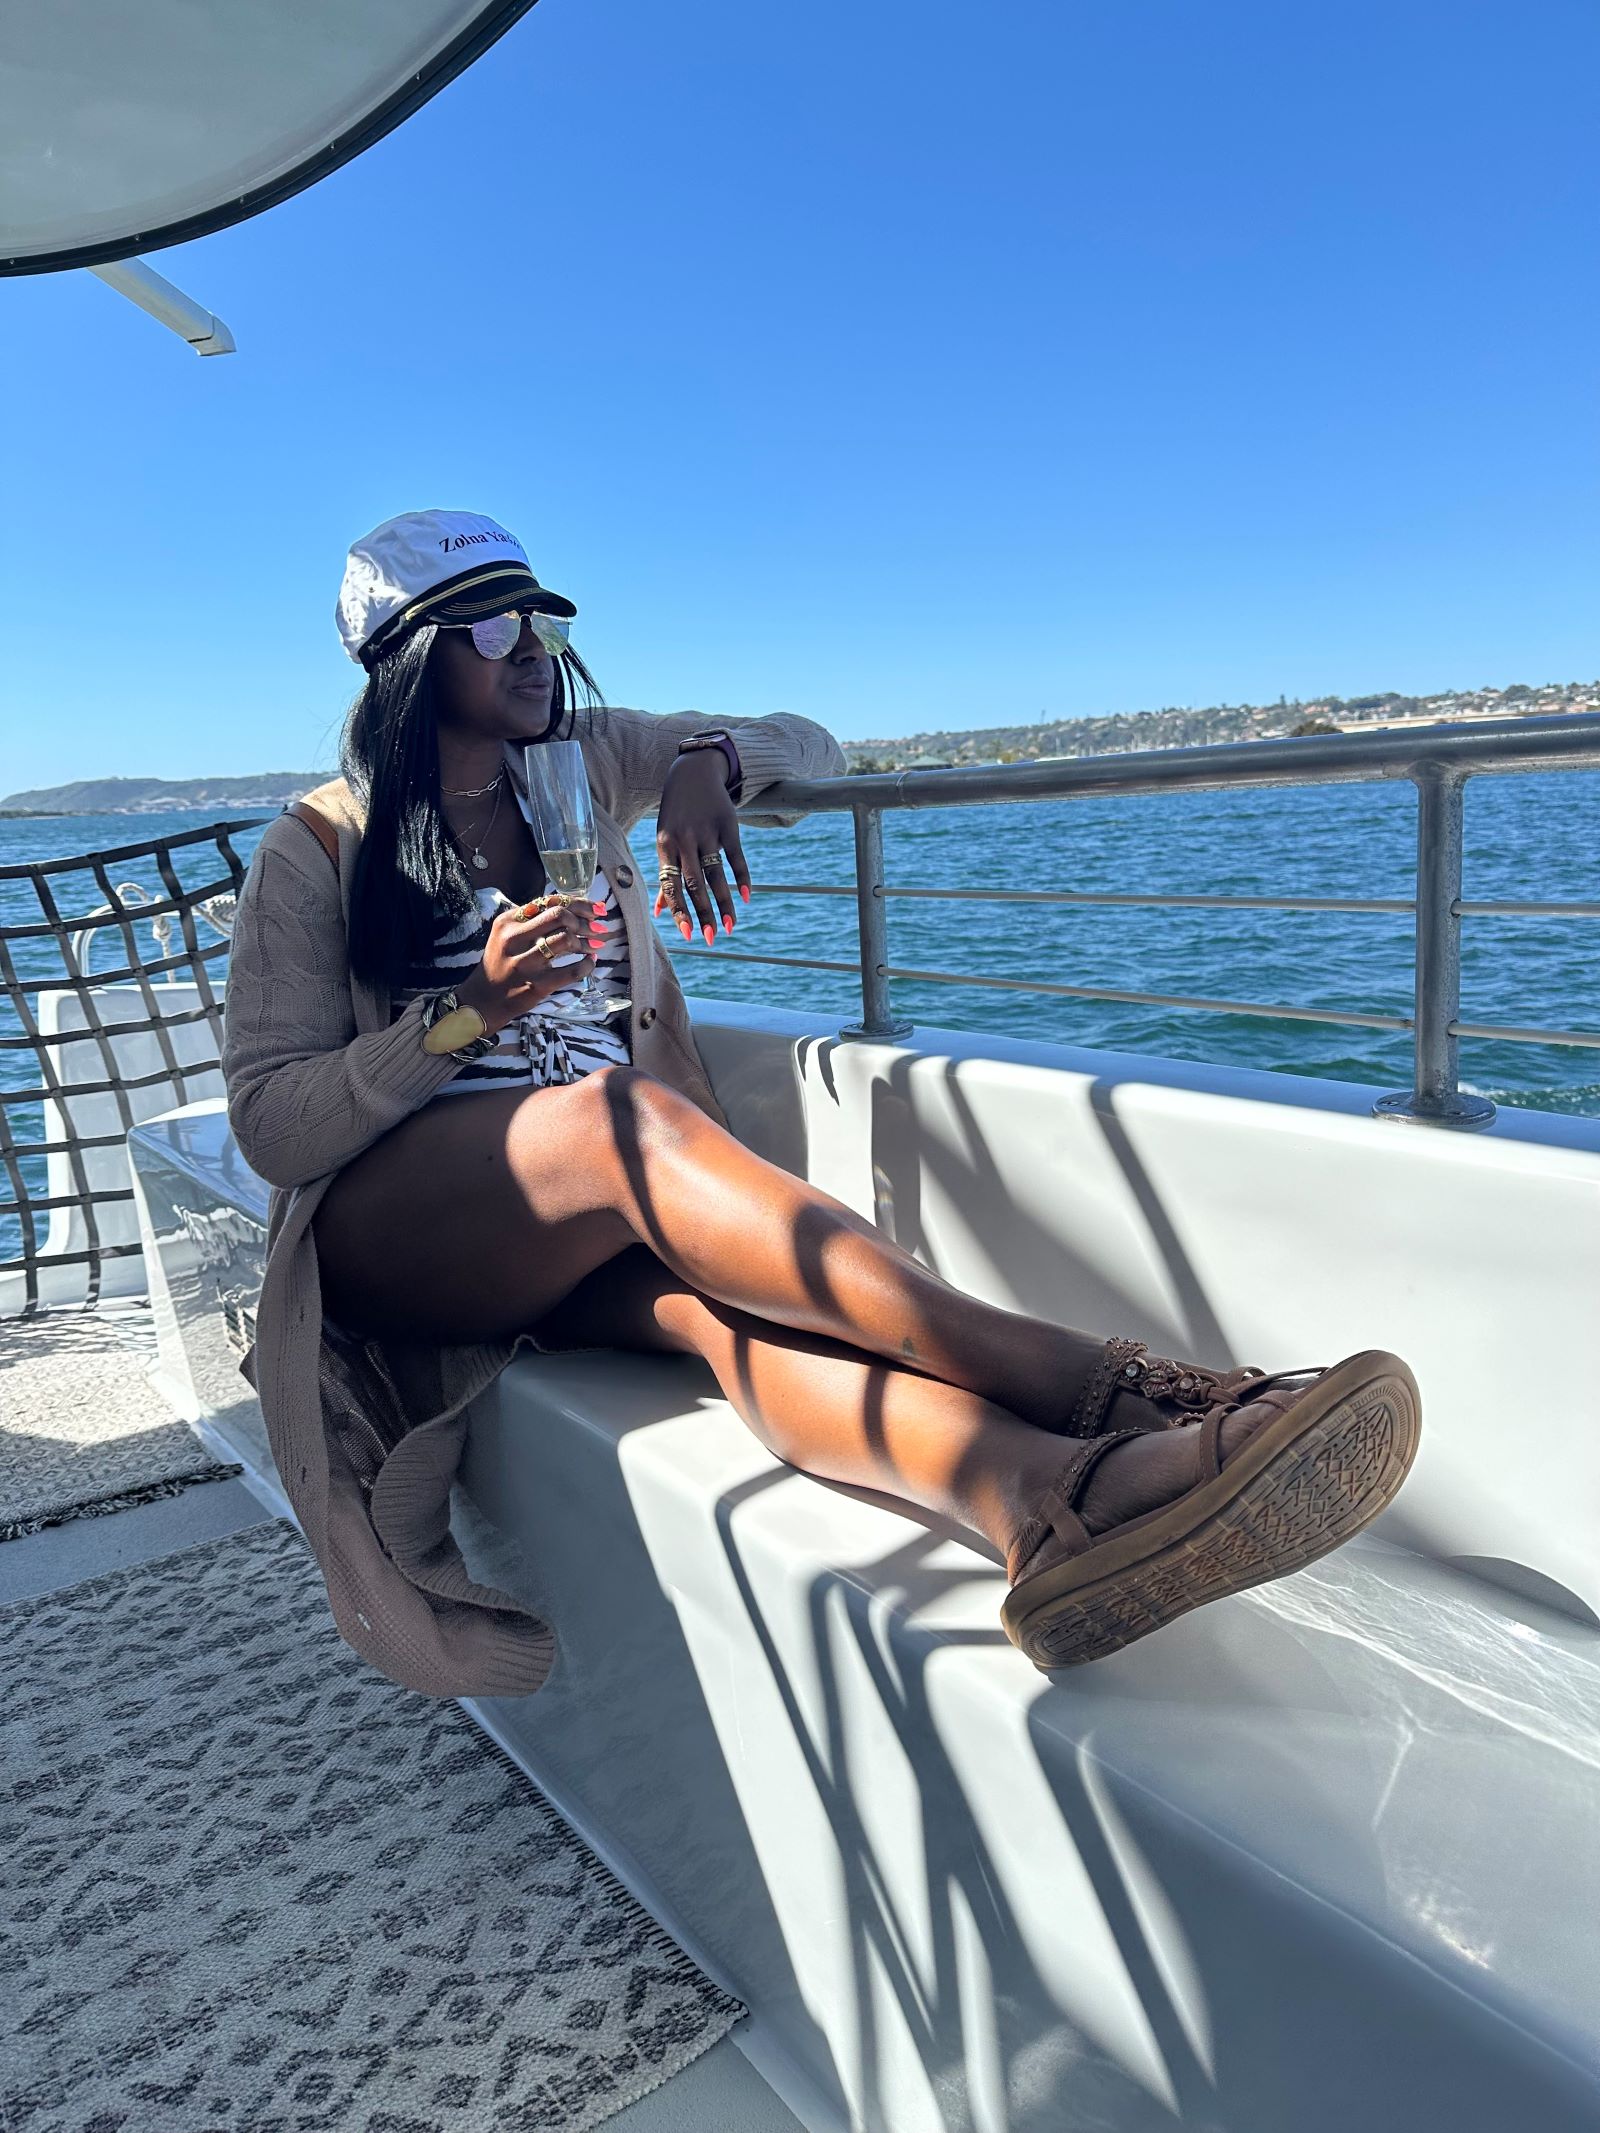 An image of lifestylye blogger Ariel aboard the luxurious Nerissa yacht.